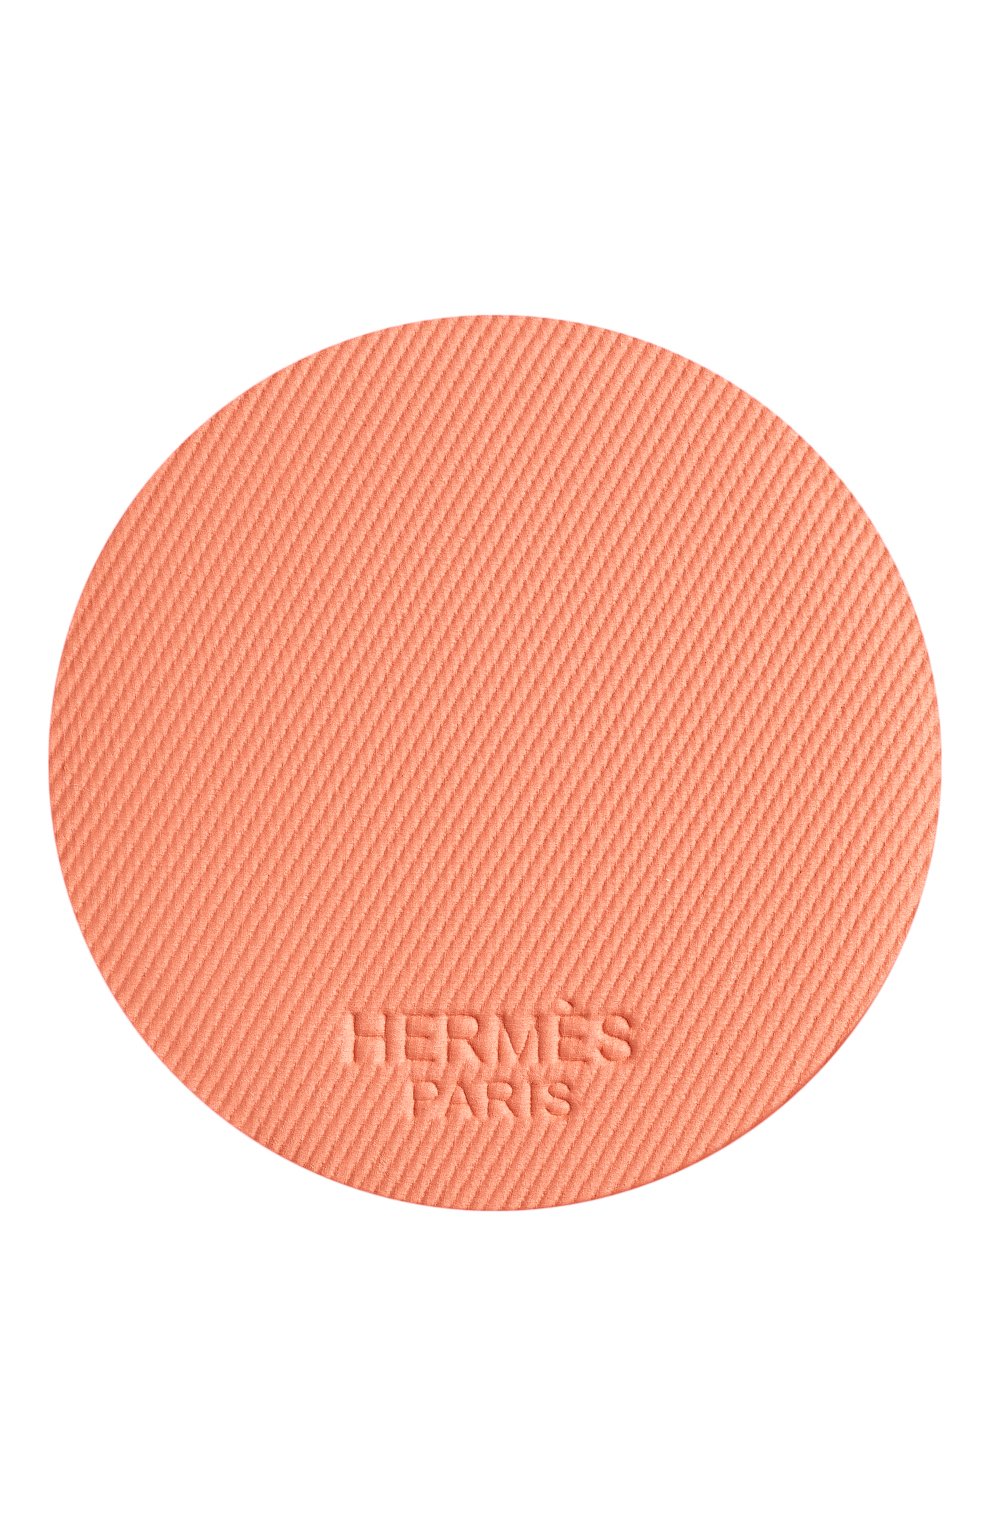 Румяна rose hermès silky blush, rose abricot​ (6g) HERMÈS  цвета, арт. 60165PV019H | Фото 8